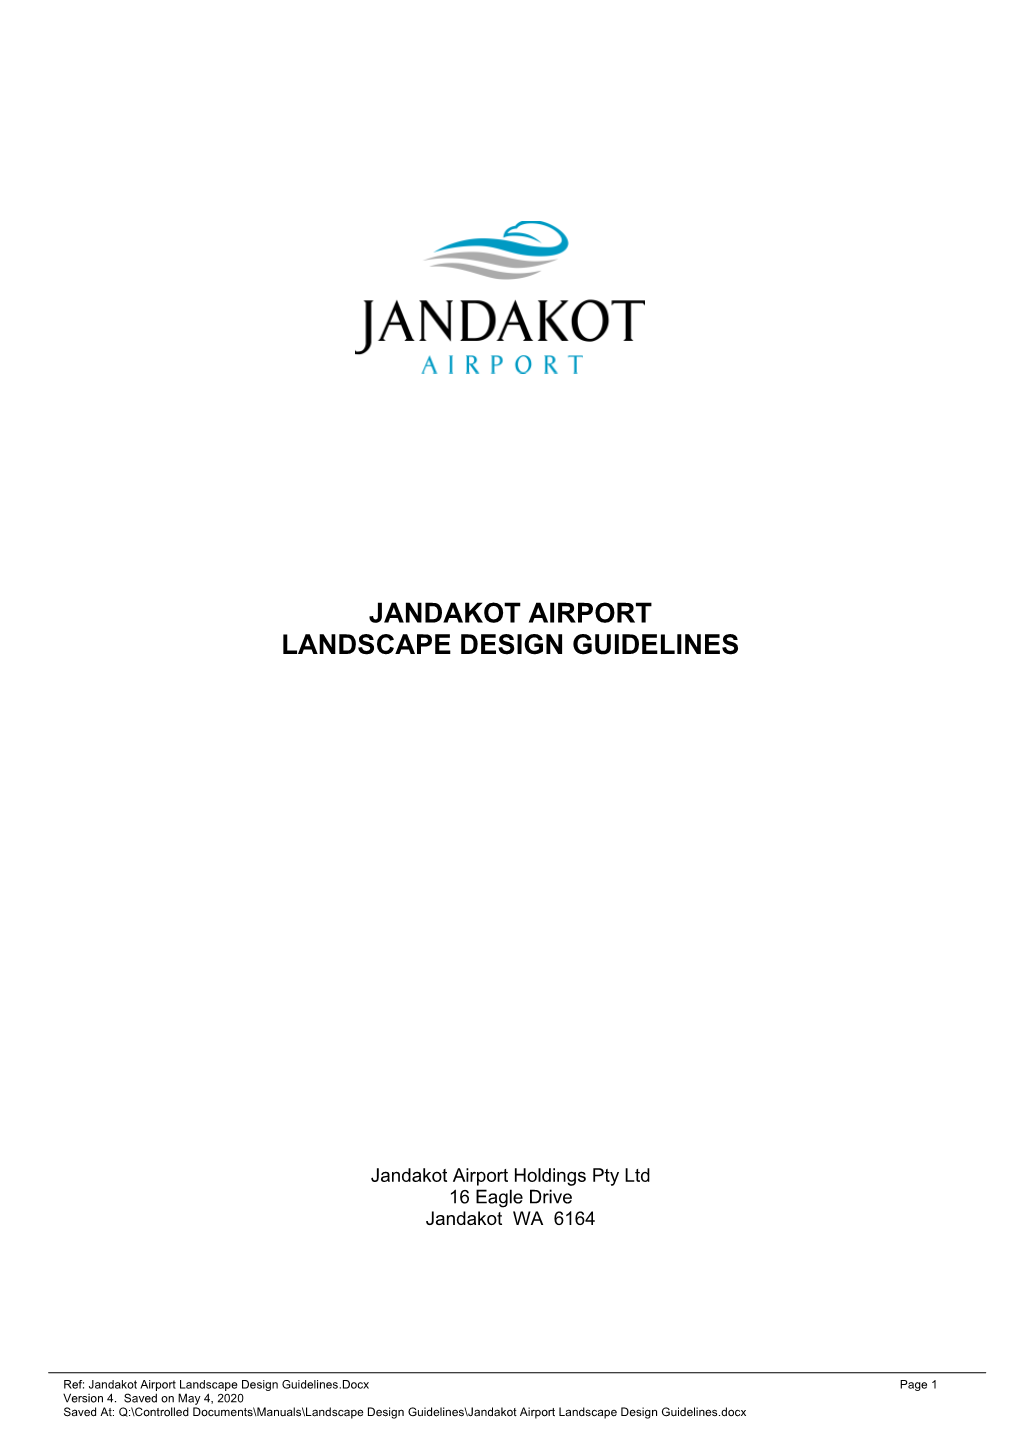 Jandakot Airport Landscape Design Guidelines